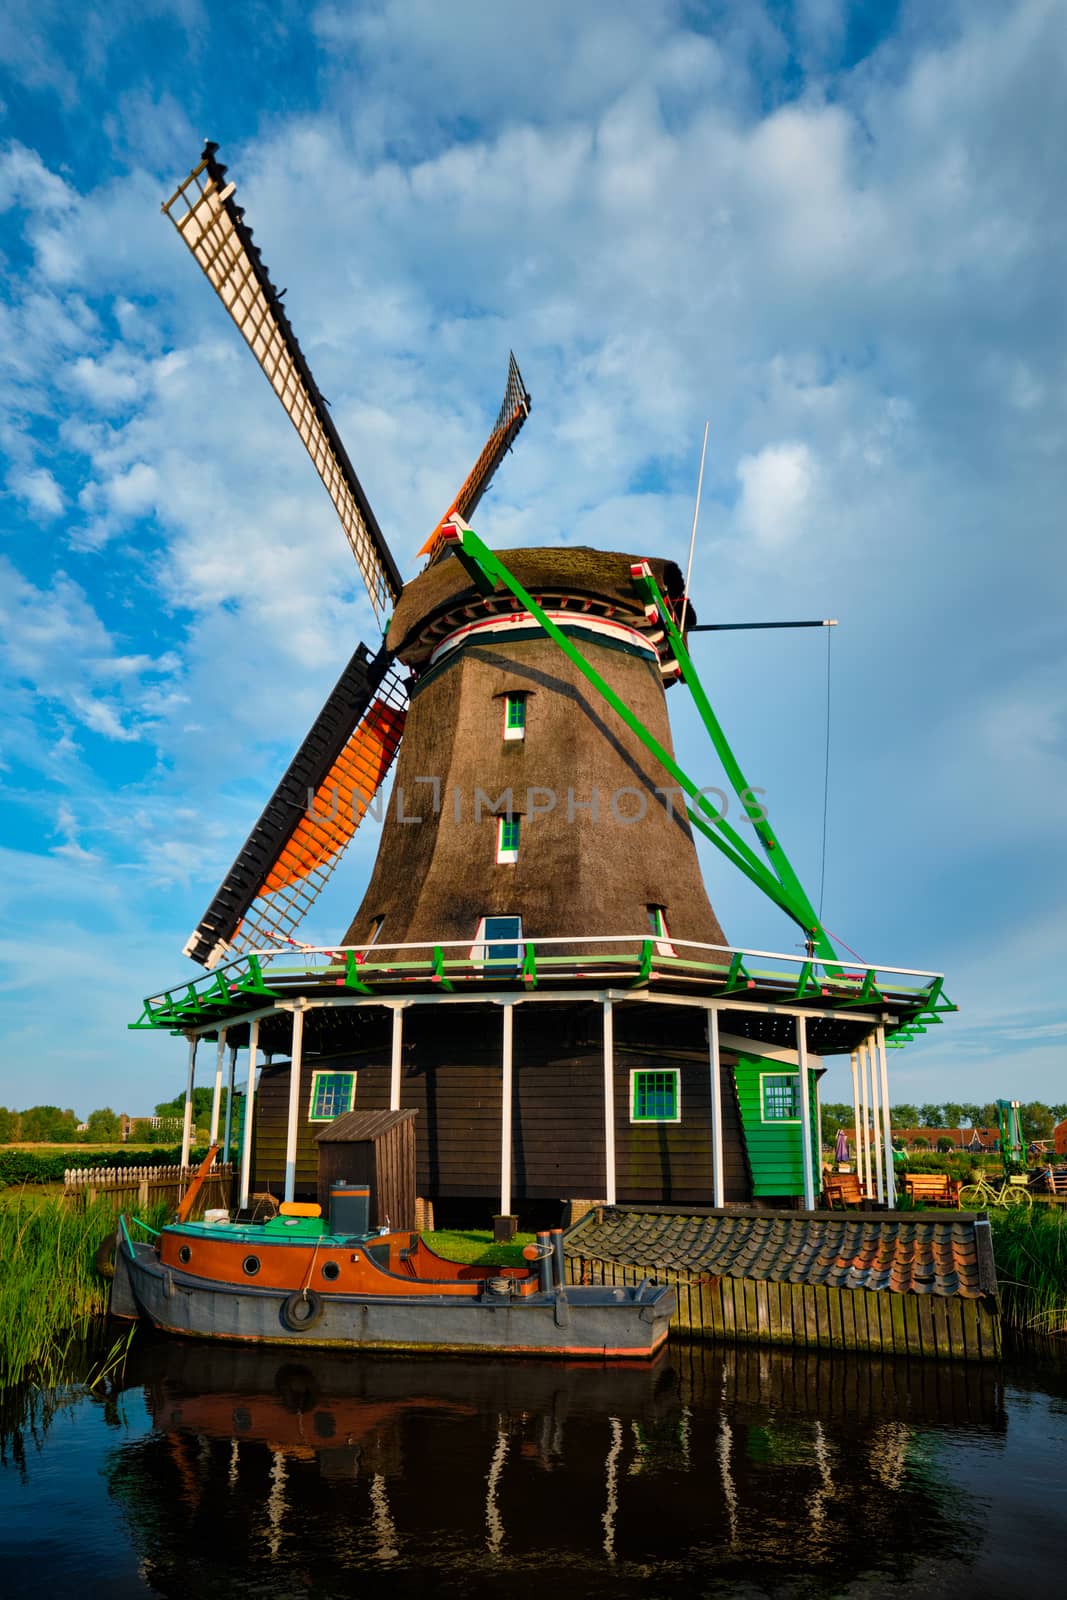 Netherlands rural lanscape - windmills at famous tourist site Zaanse Schans in Holland. Zaandam, Netherlands